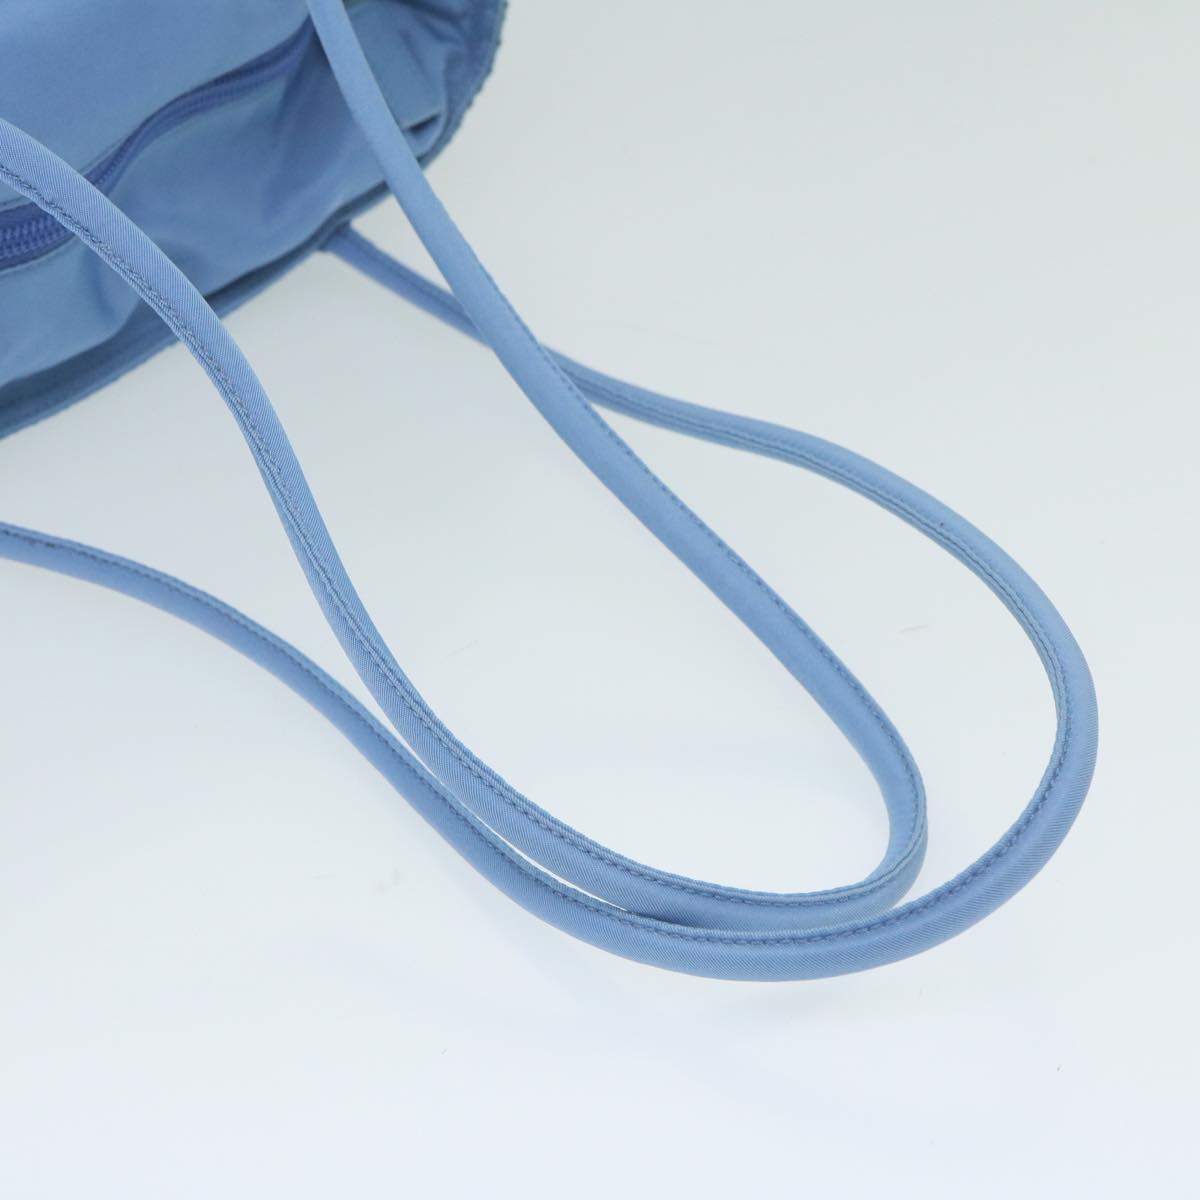 PRADA Tote Bag Nylon Light Blue Auth 60821